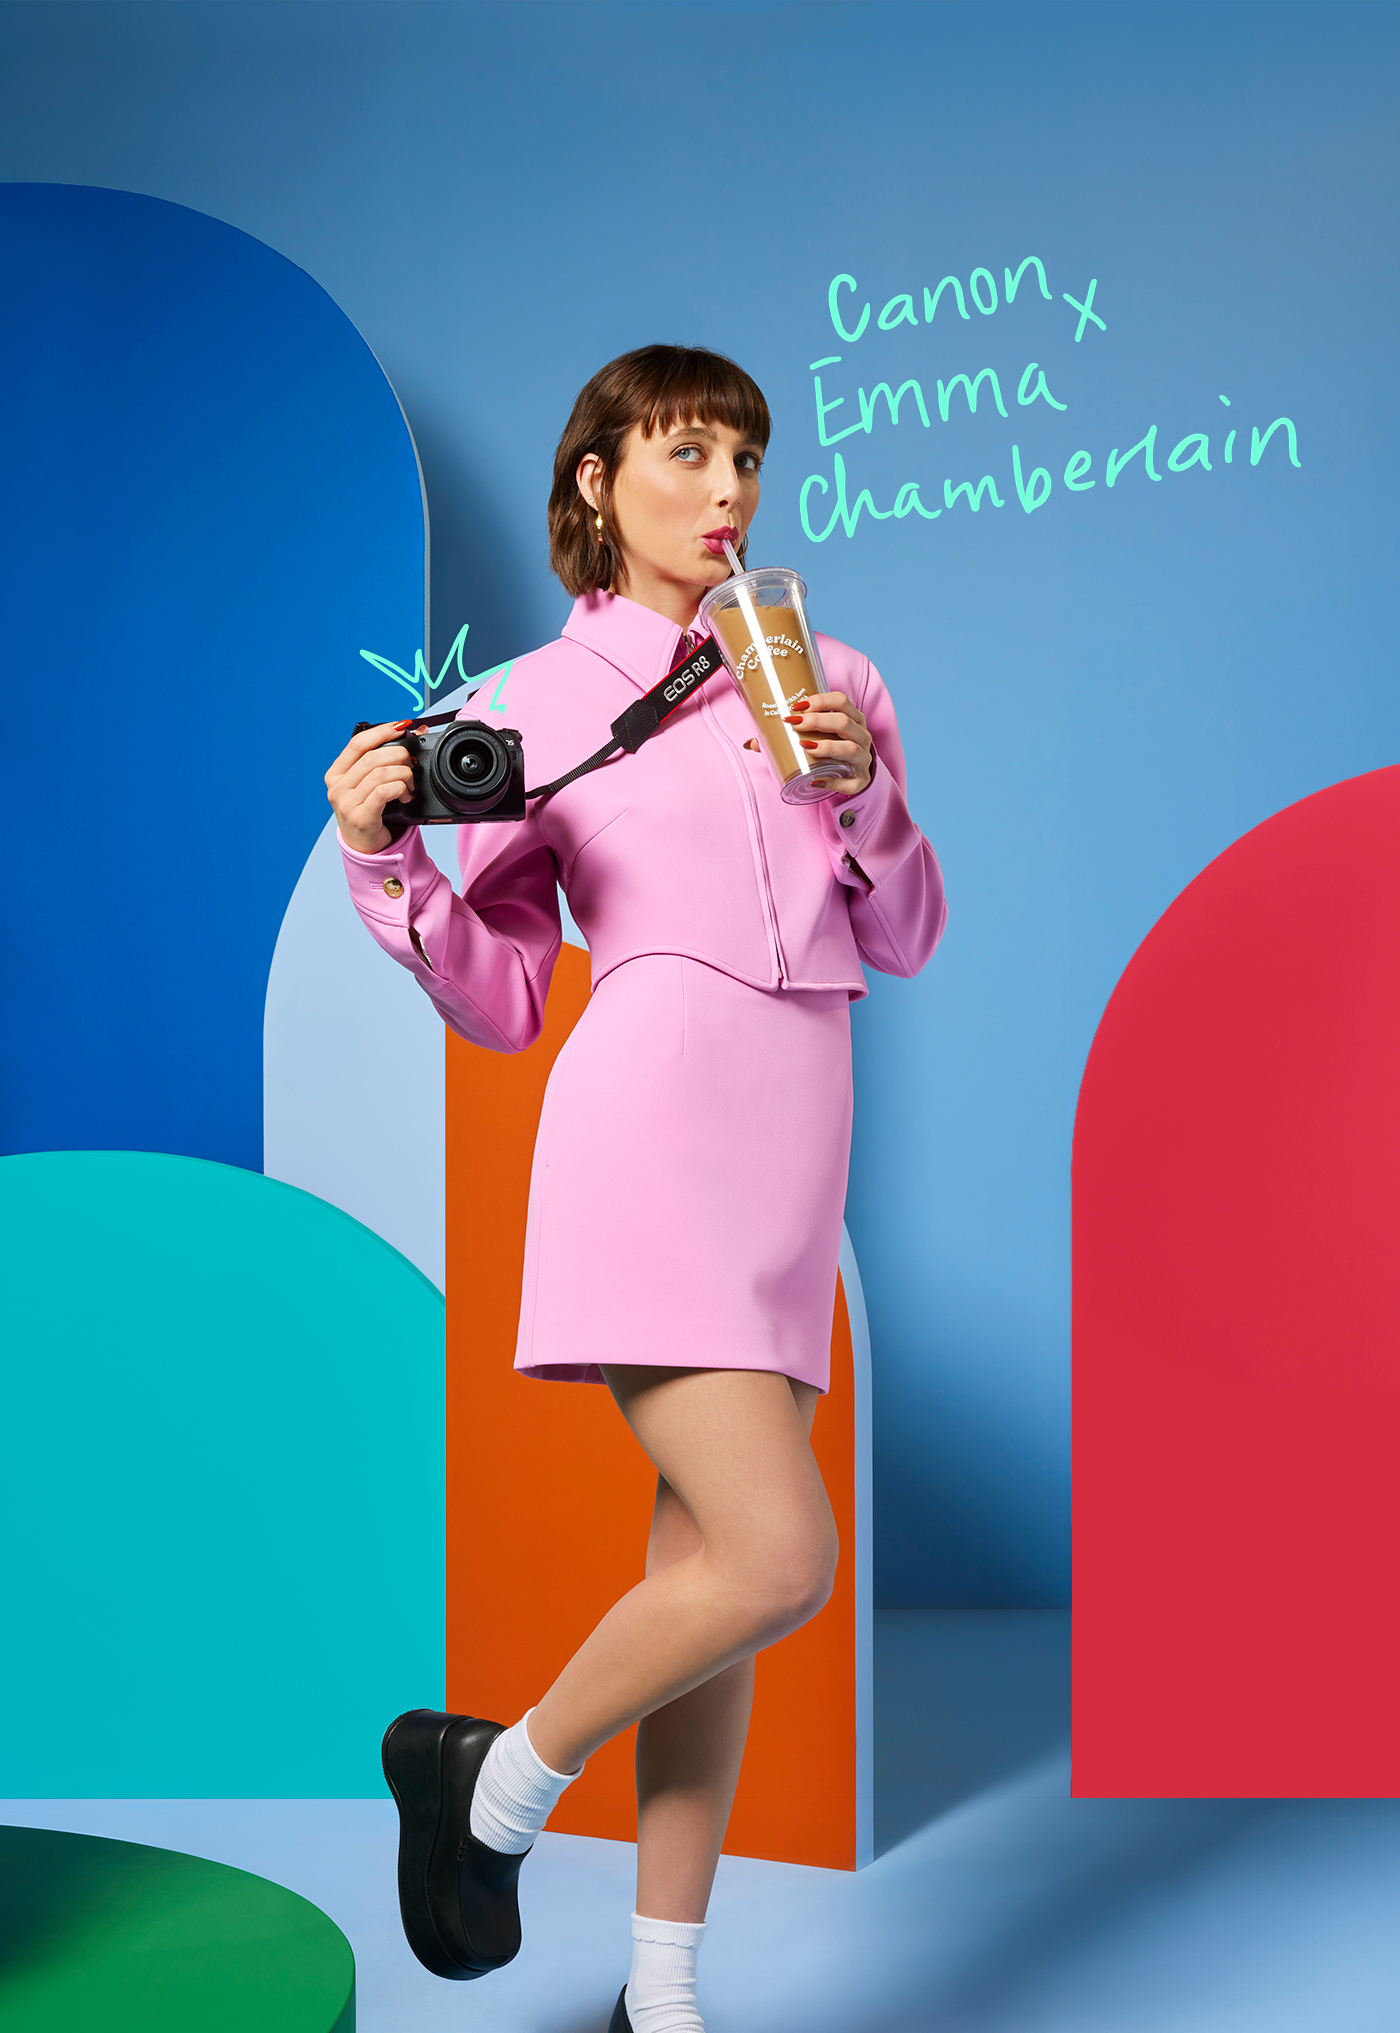 Canon Announces Emma Chamberlain as Brand Ambassador